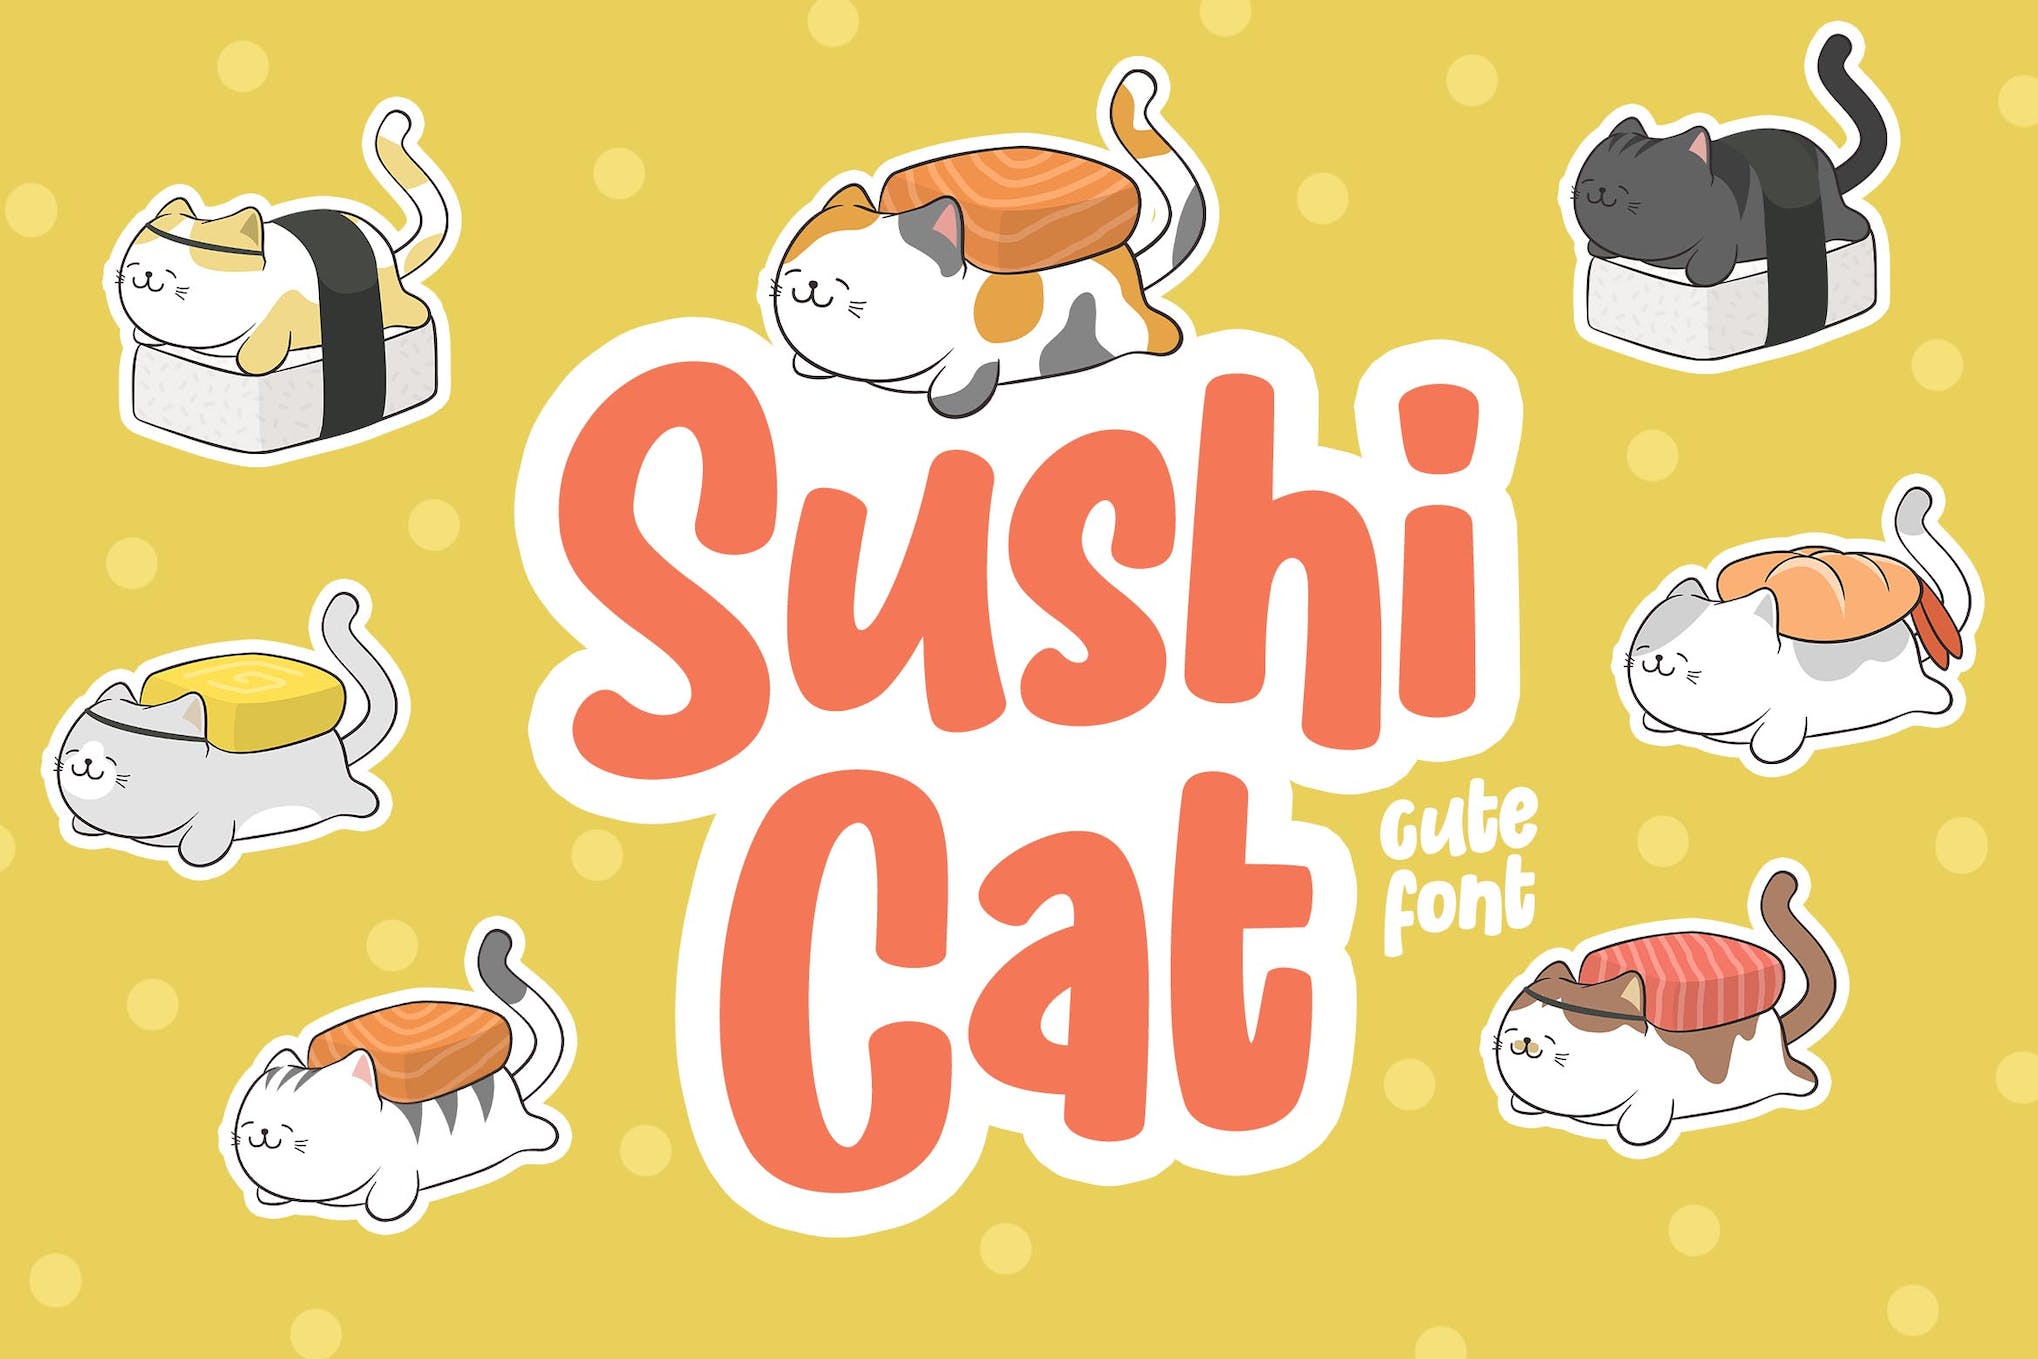 Sushi Cat - Cute Whimsical Font